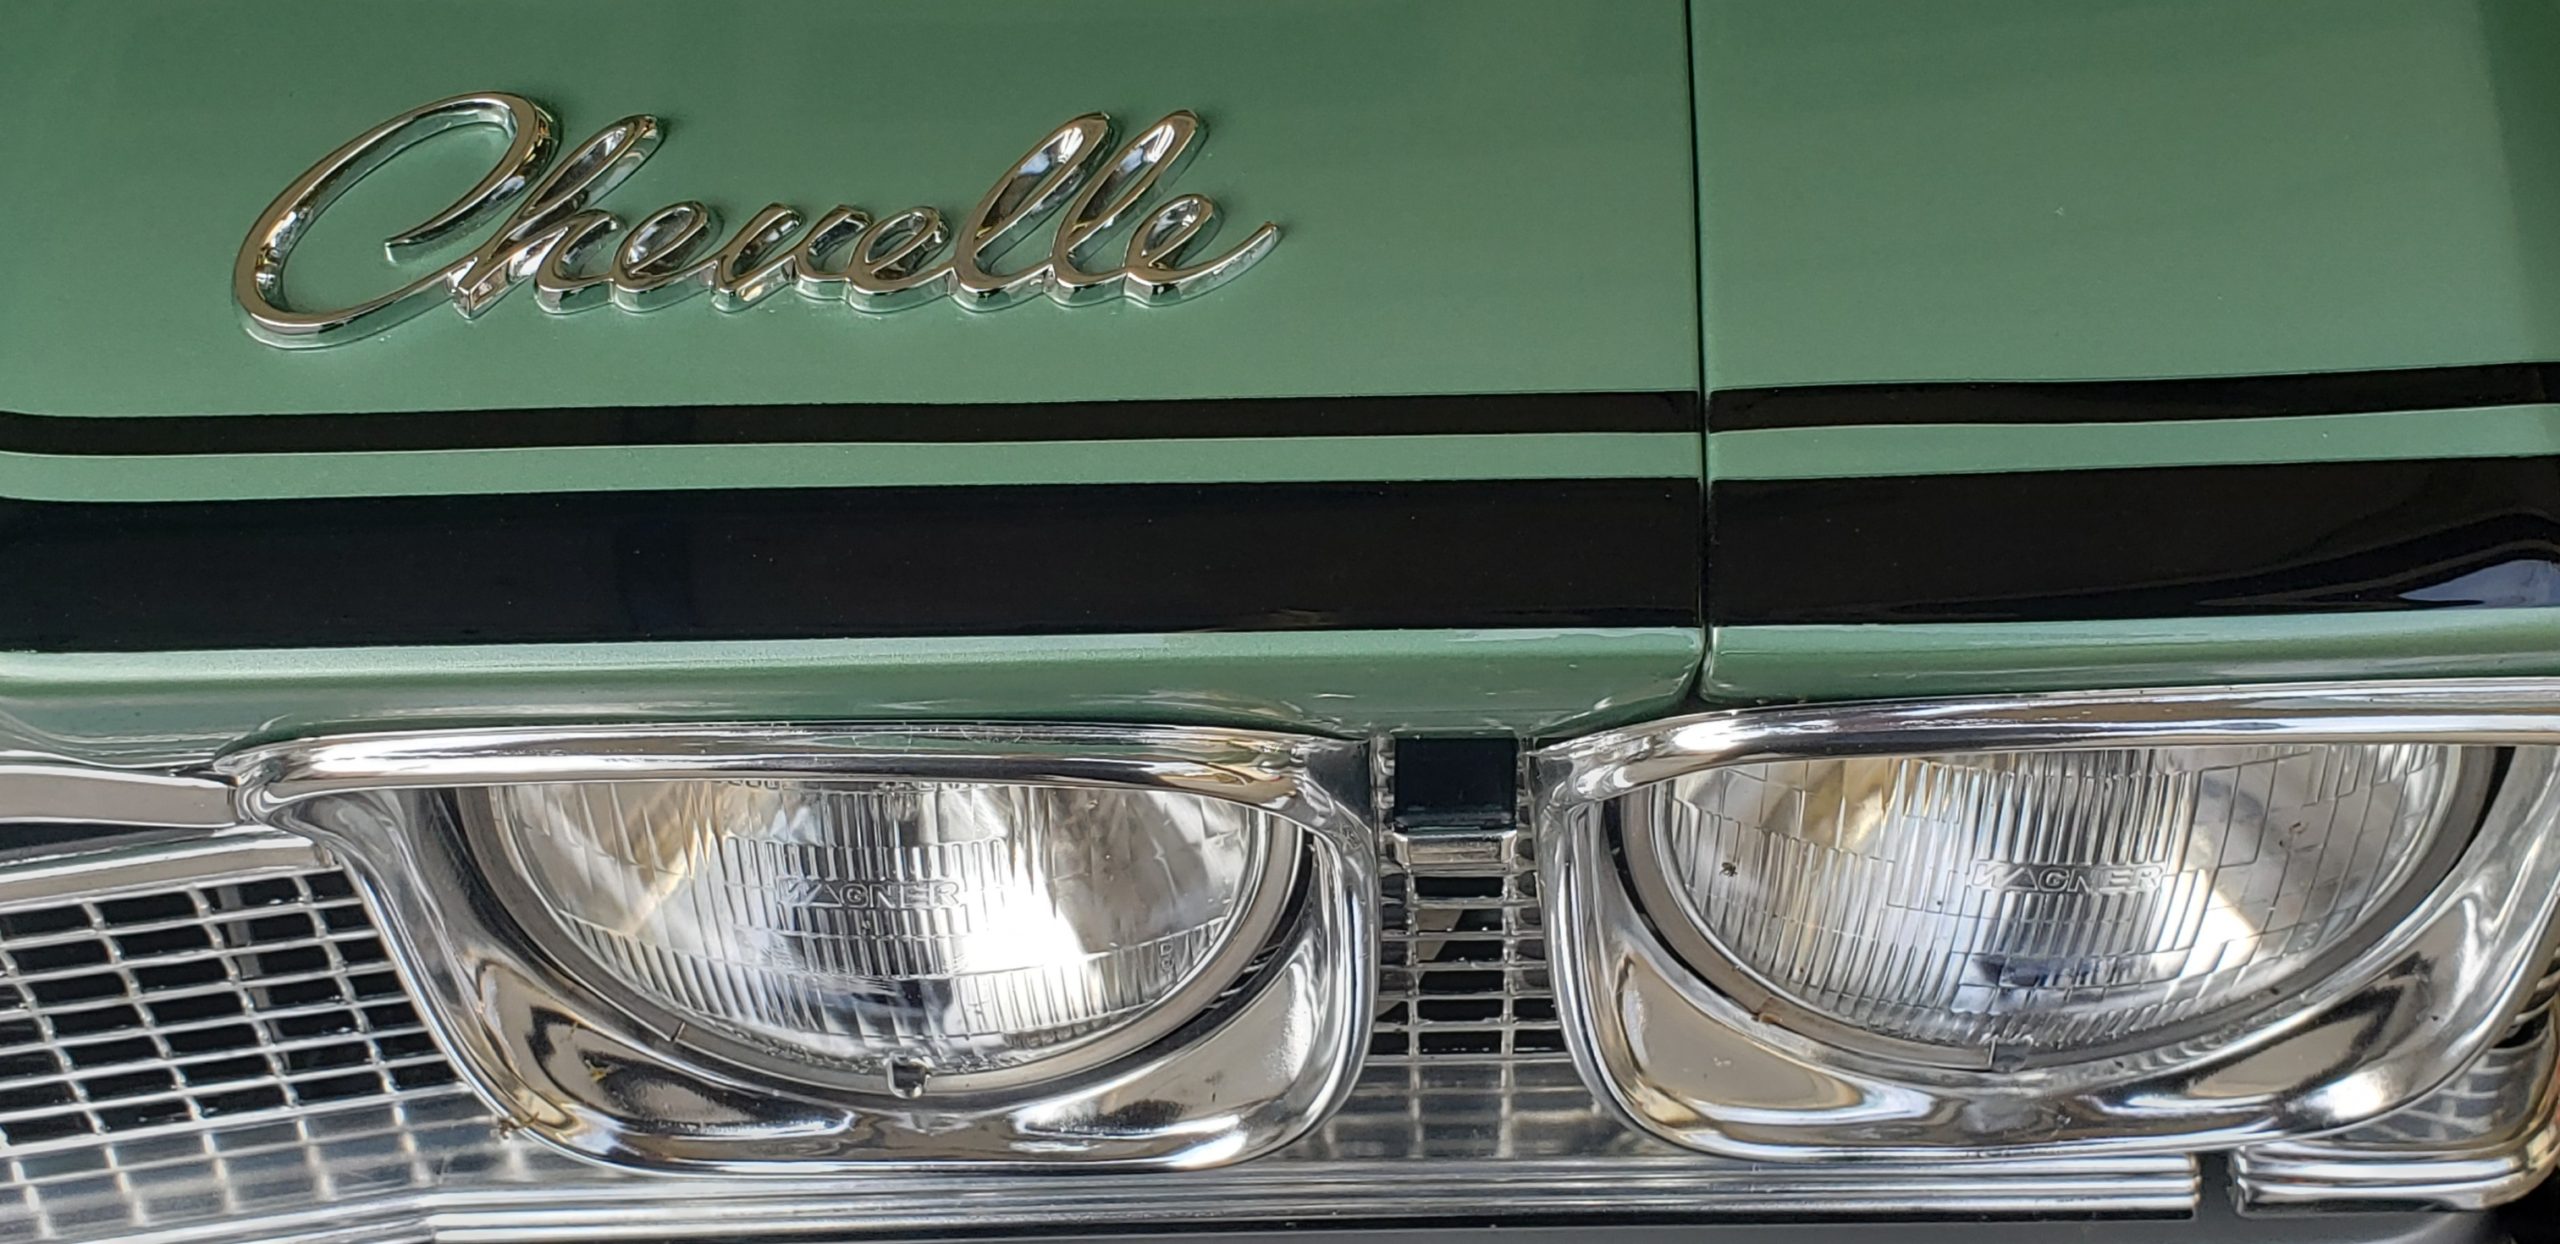 1968 Chevelle